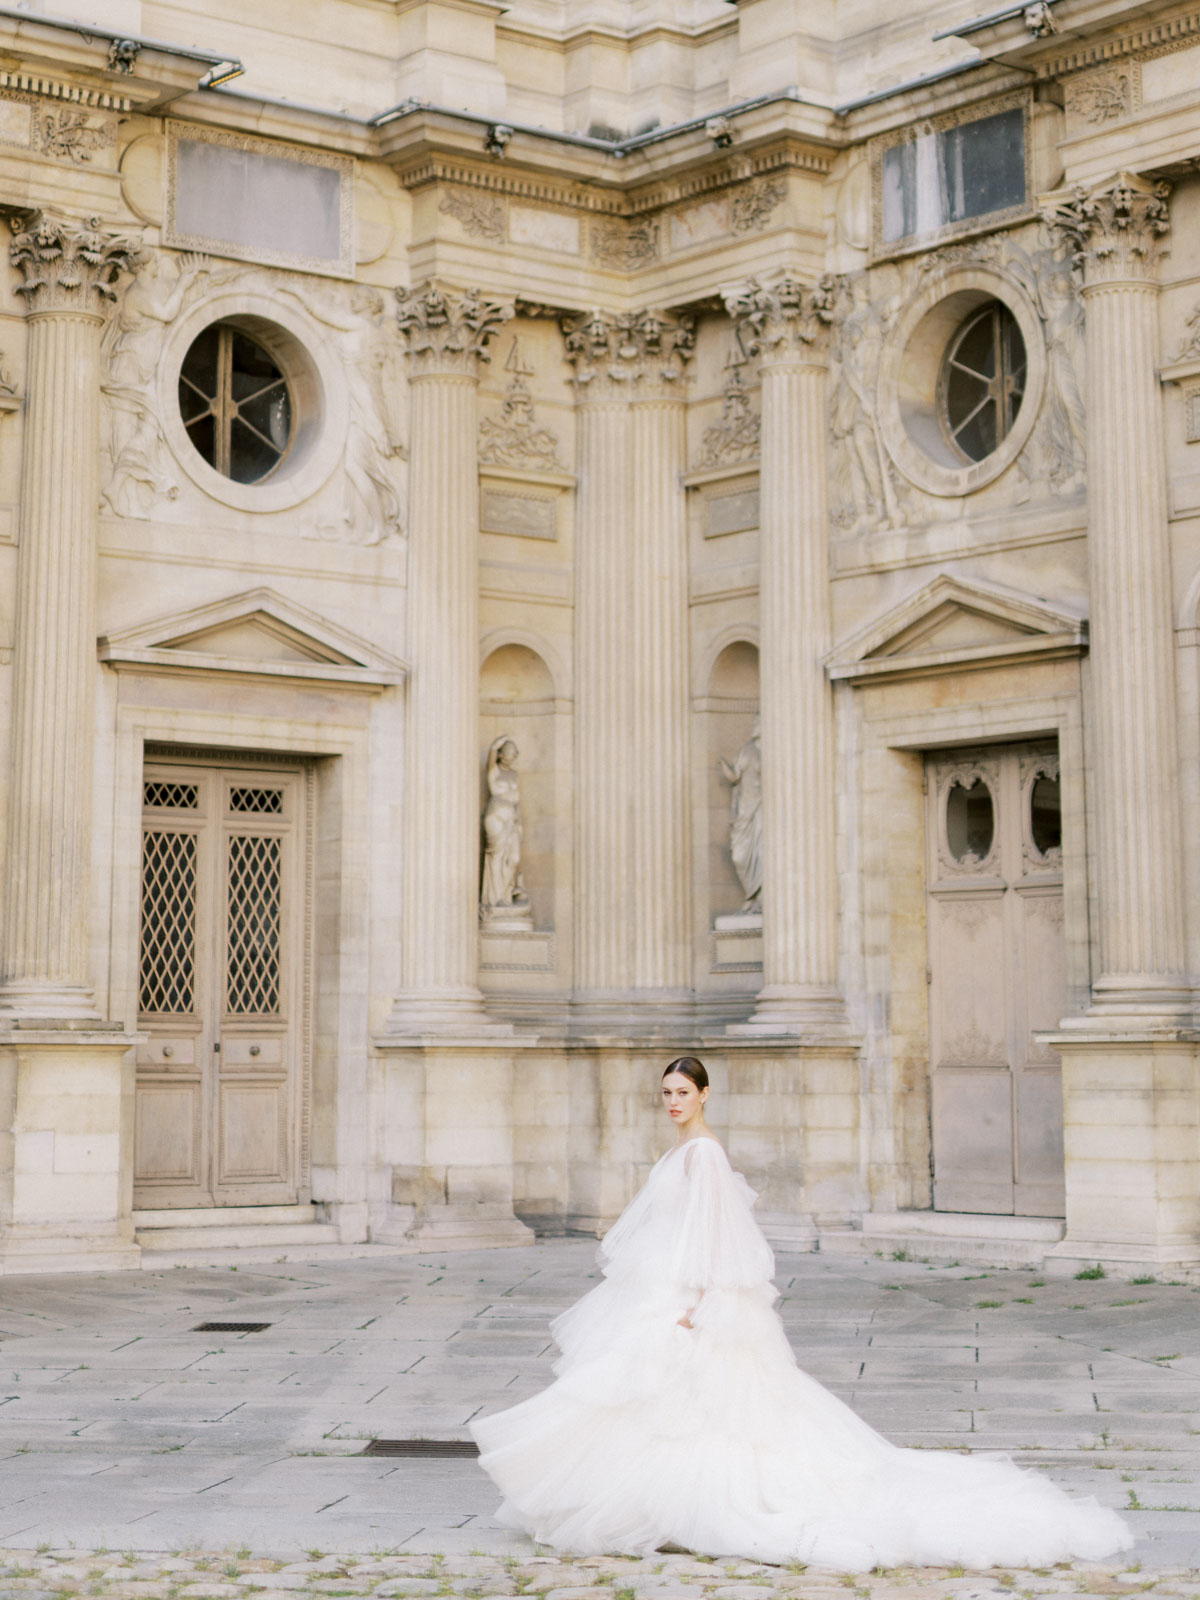 The Louvre Paris Wedding Photos | Chernogorov Photography Destination Wedding Photographers